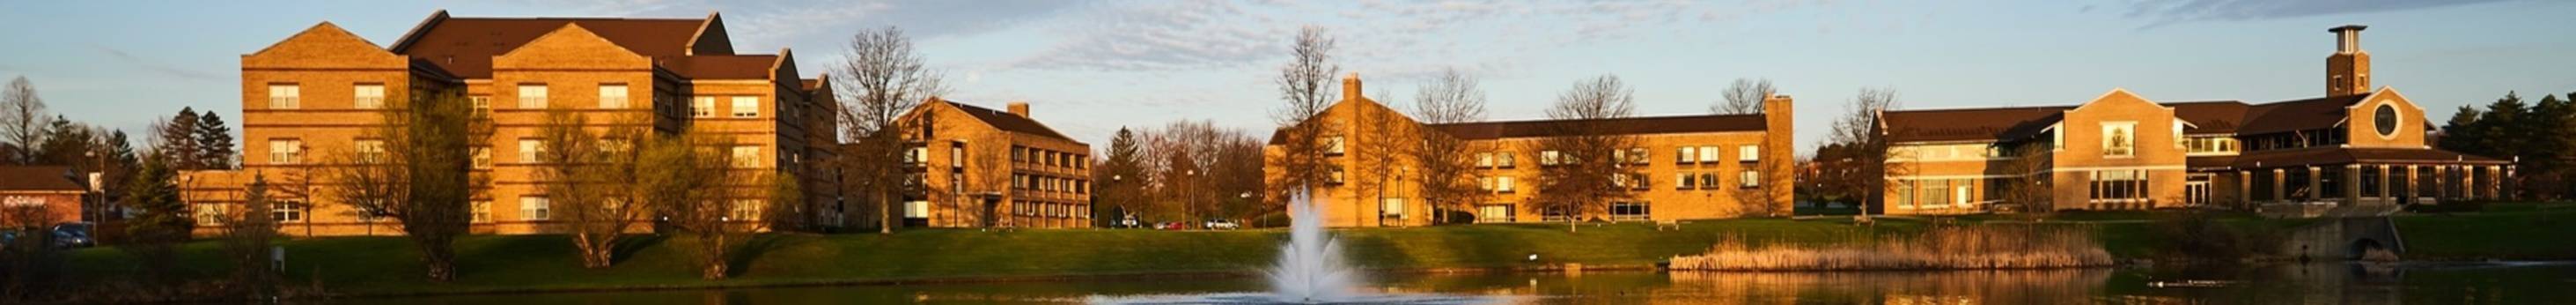 Ursuline college campus reflected in water